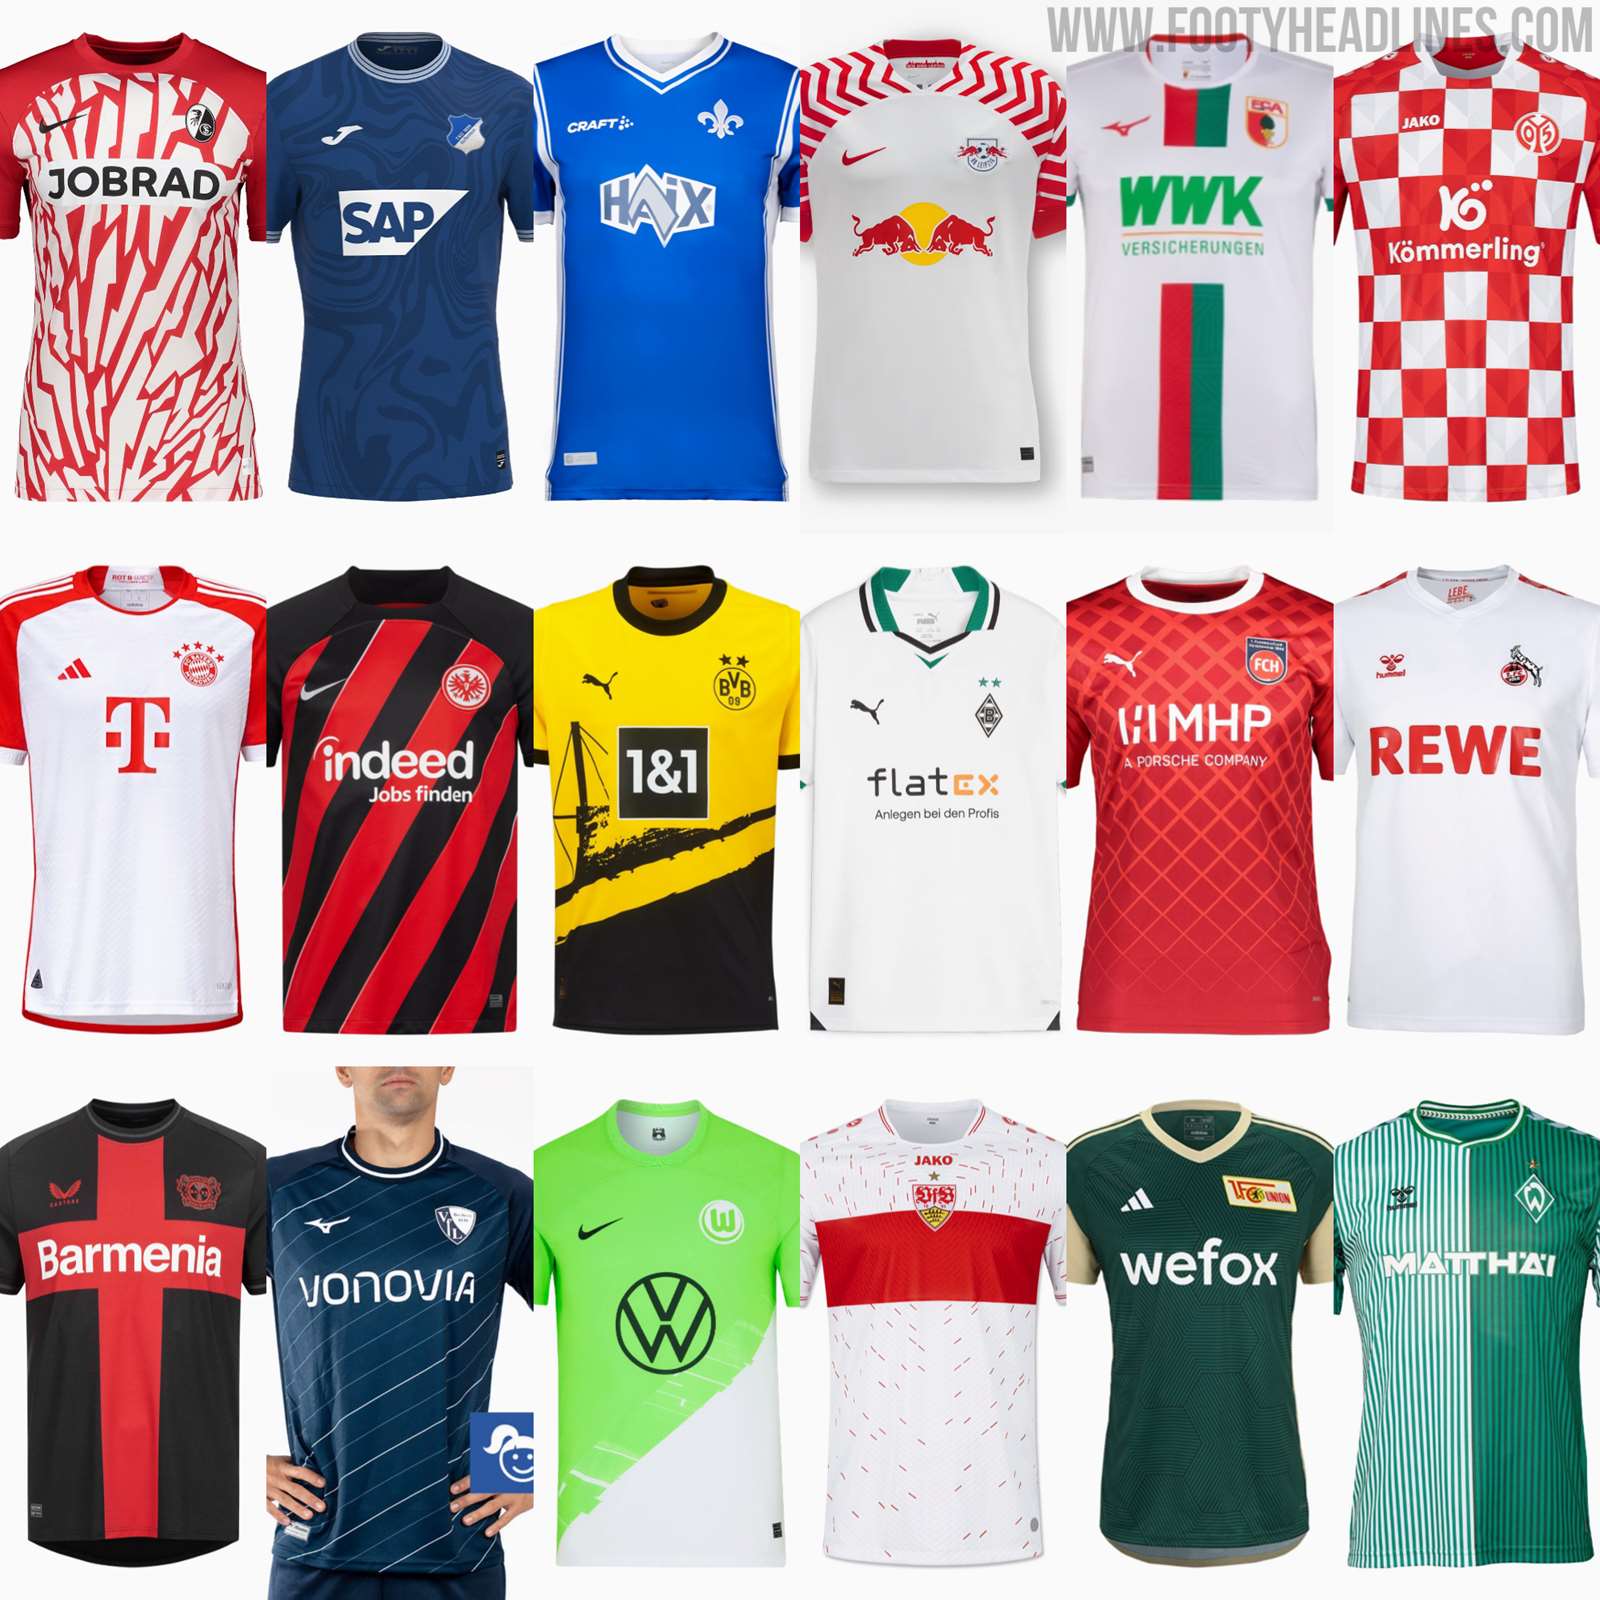 Big Brand Variety in 23-24 Bundesliga Kit Battle